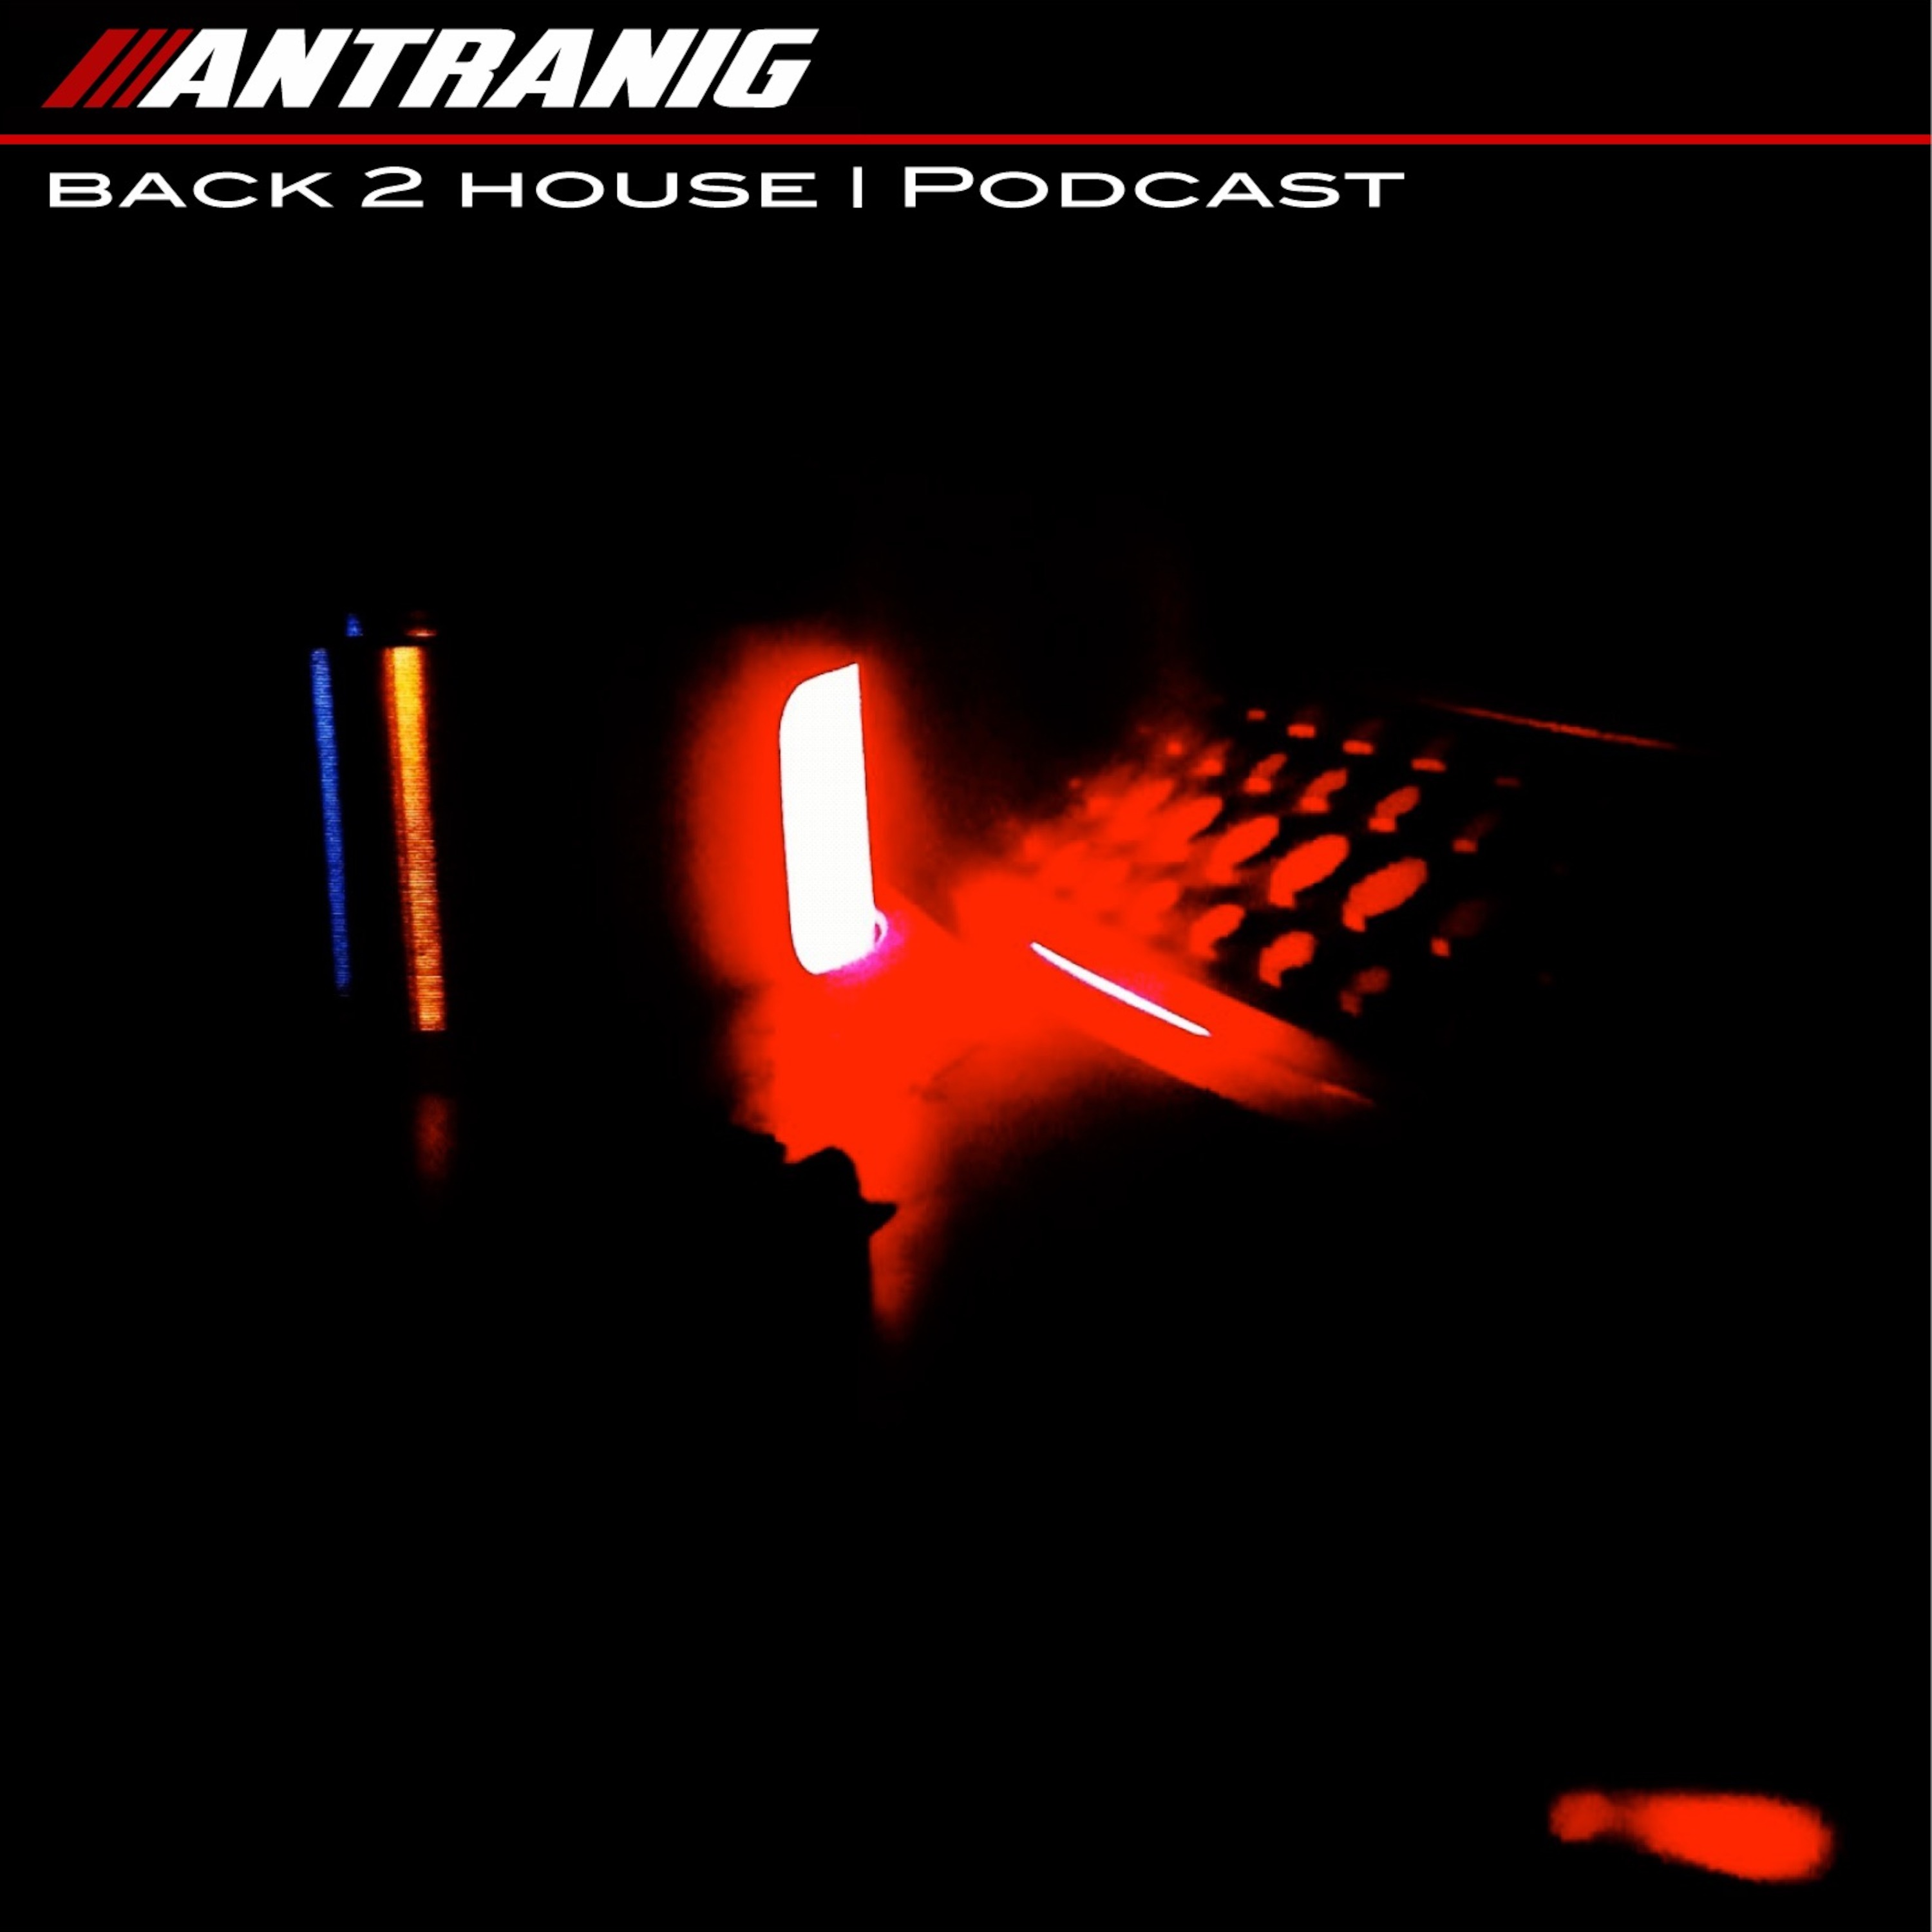 Antranig 'Back 2 House' Podcast